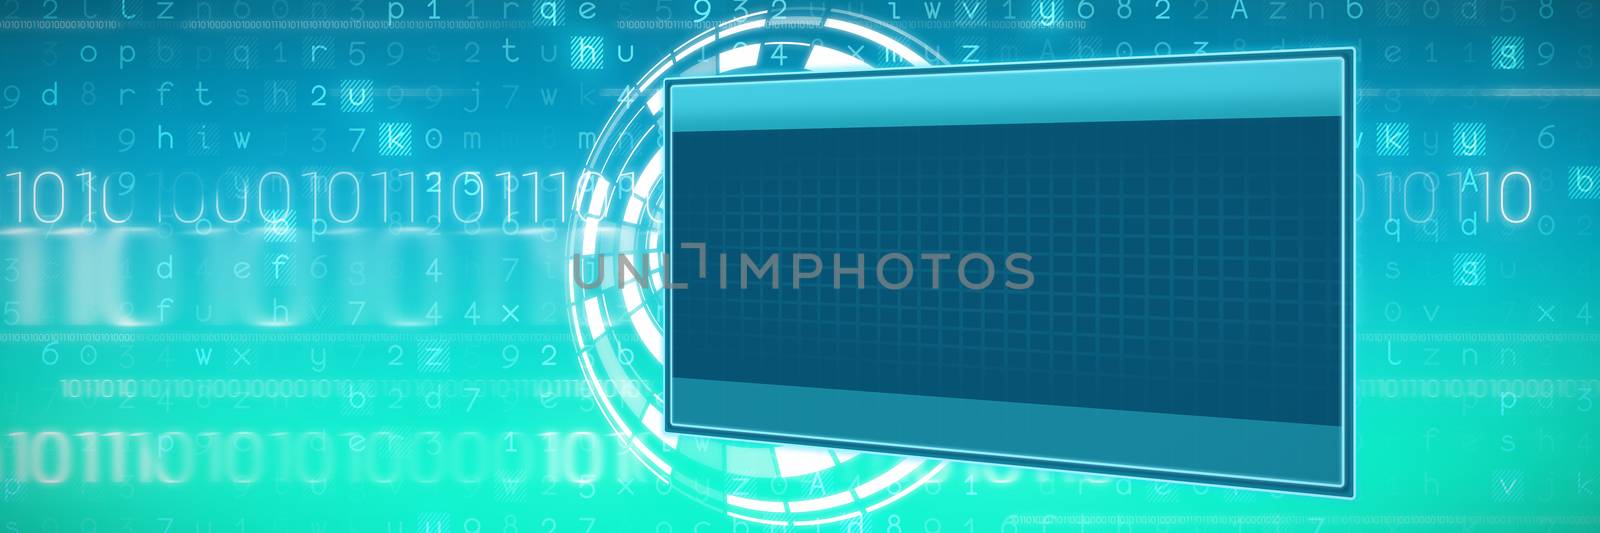 Composite image of digital background by Wavebreakmedia